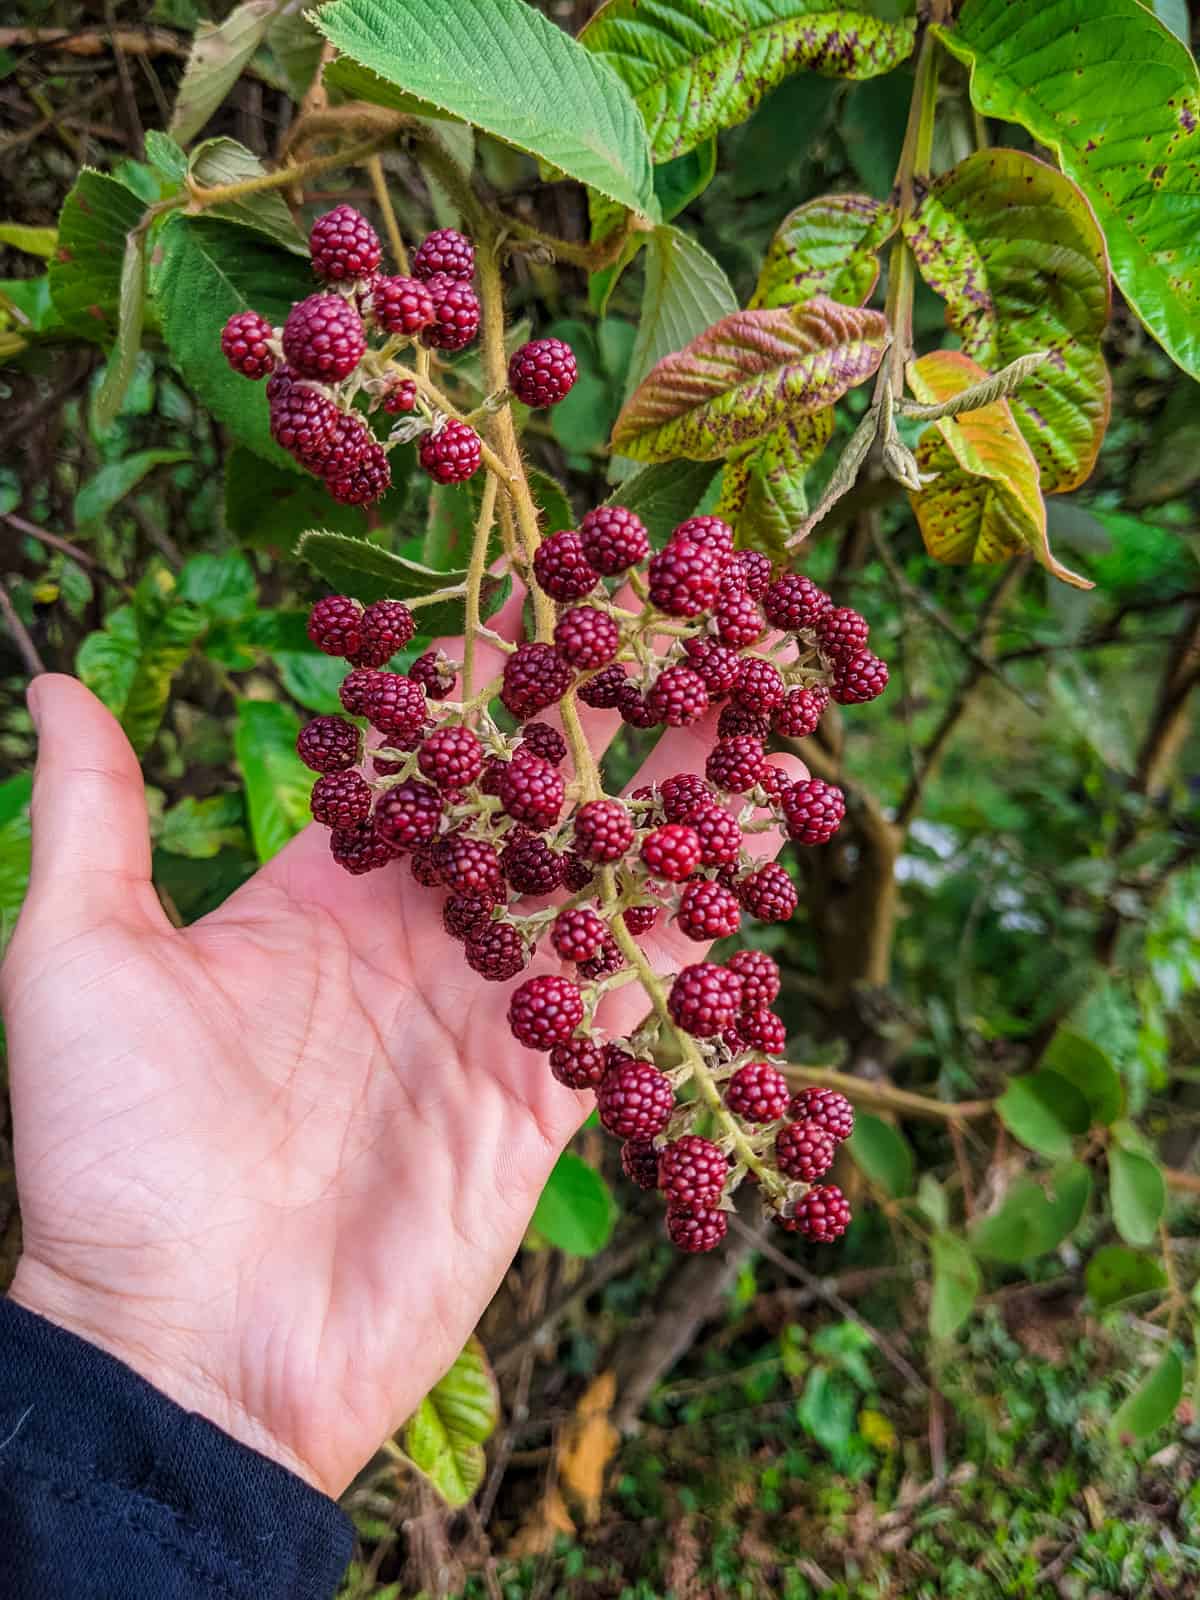 Photograph of a juicy cluster of blackberries at El Jardín Farm, showcasing the lush nature in Gómez Plata, Antioquia